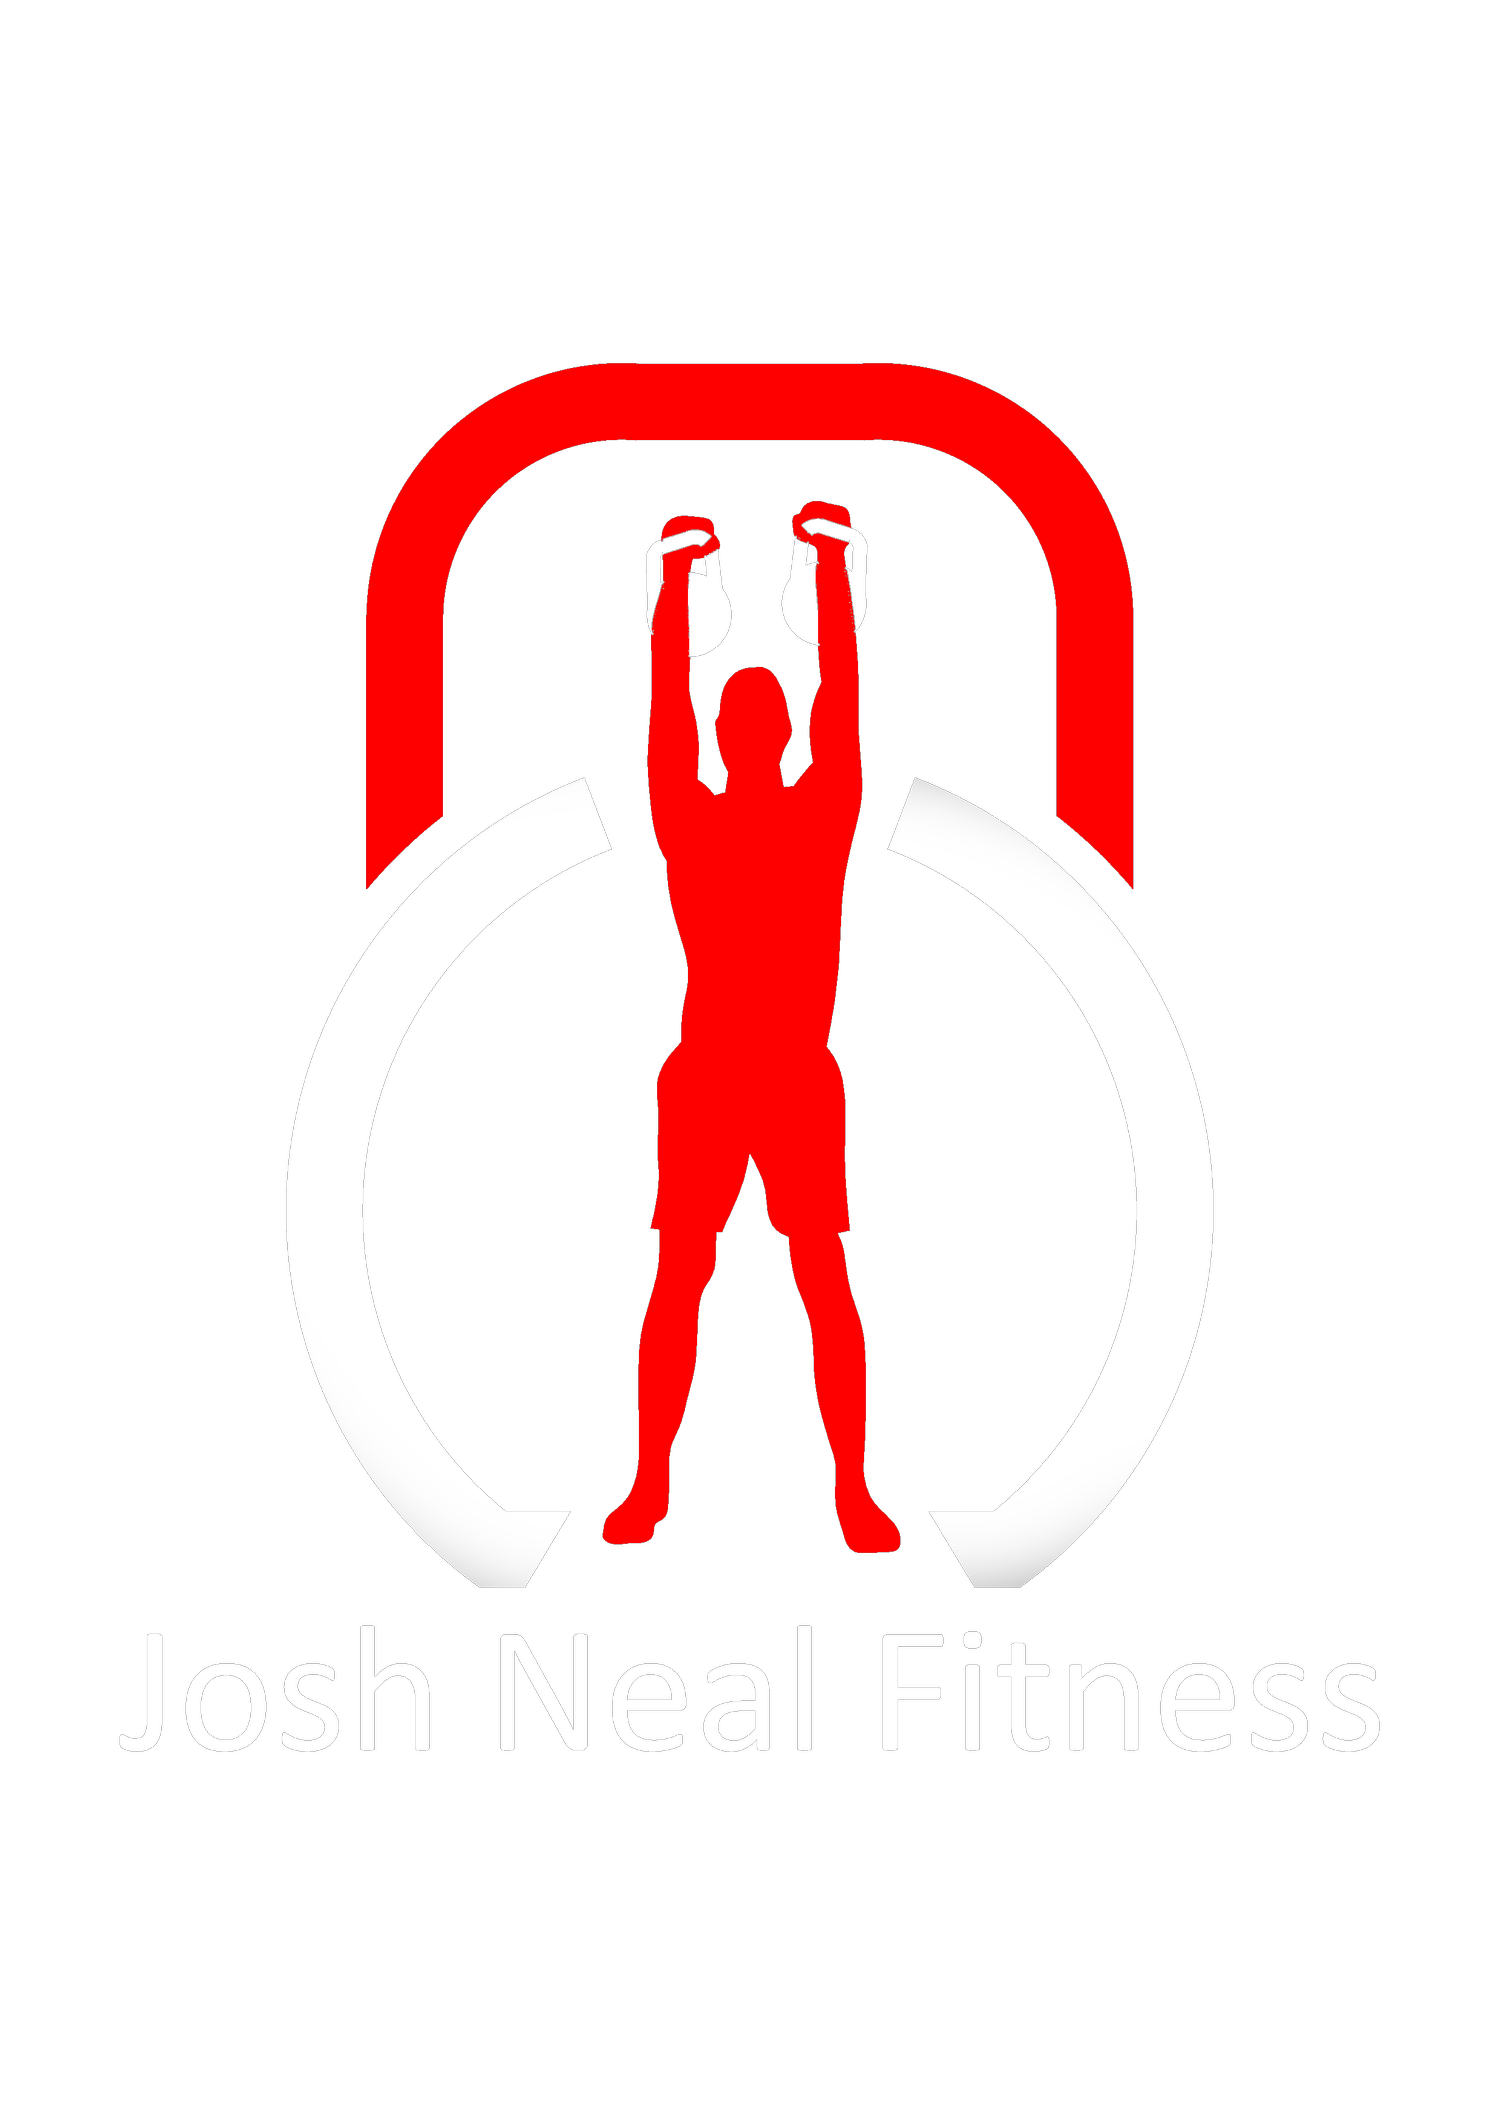 Josh Neal Fitness